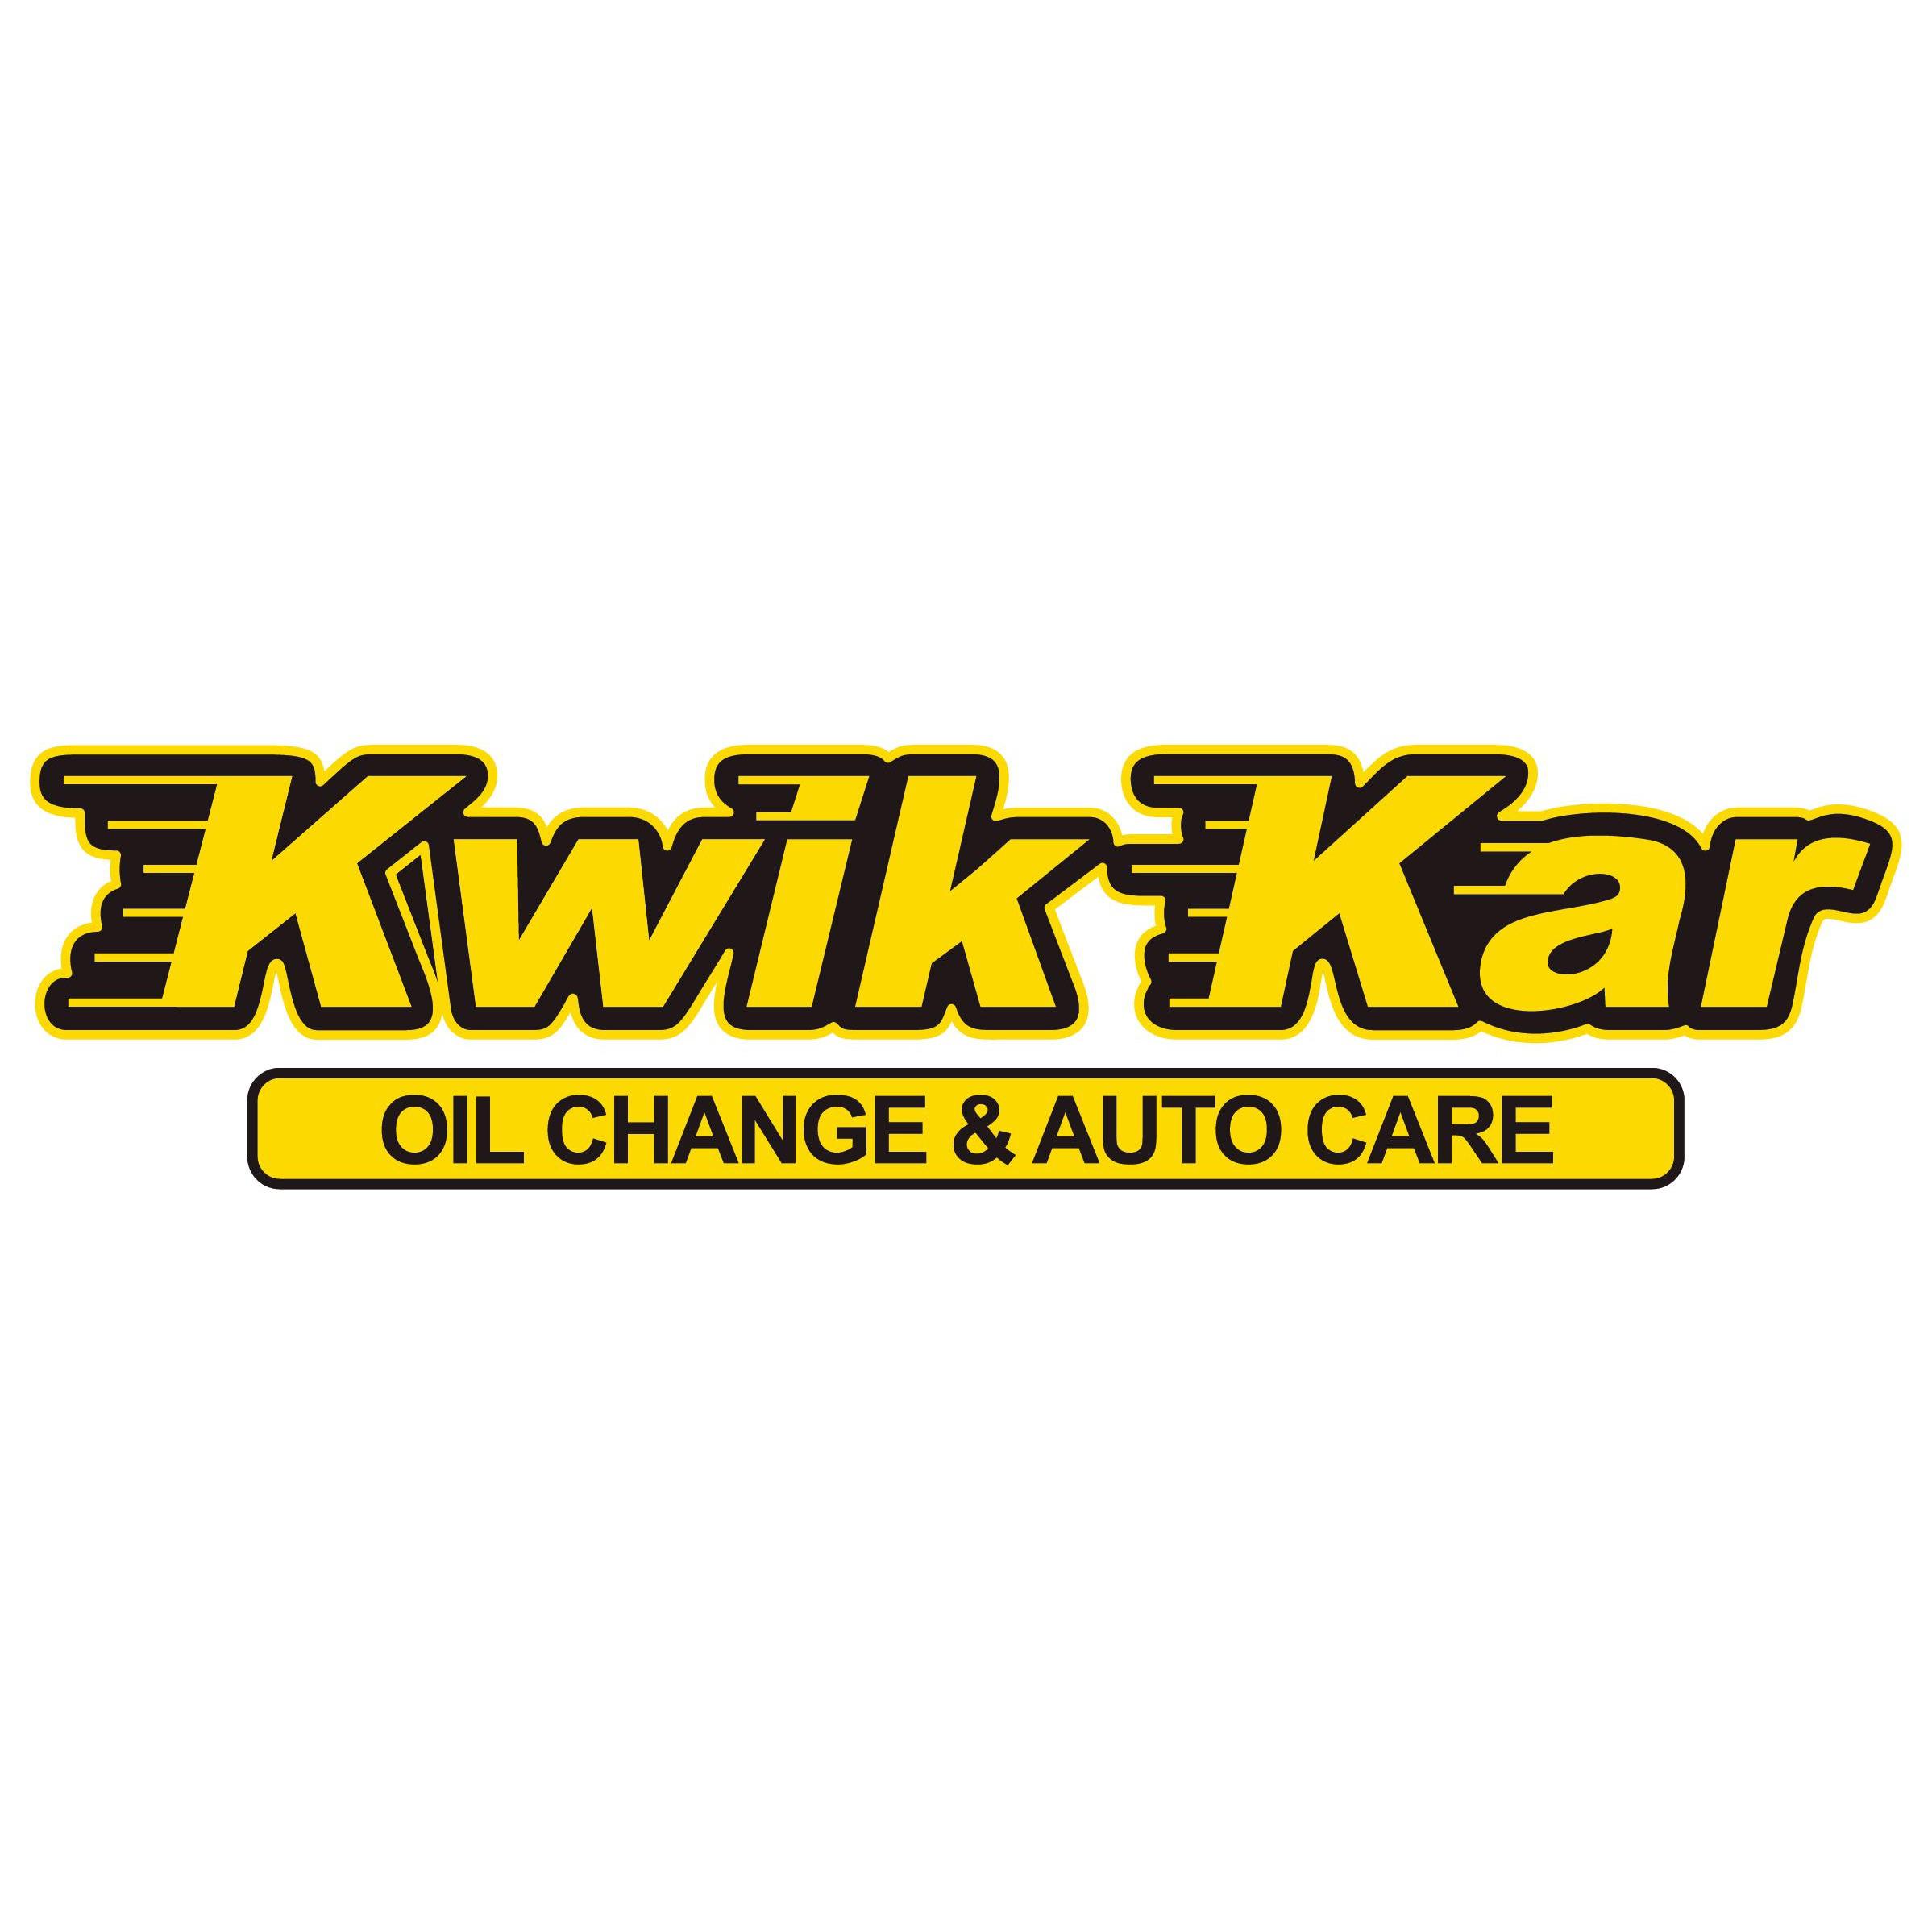 Kwik Kar Oil Change & Auto Care Plano (972)578-2877